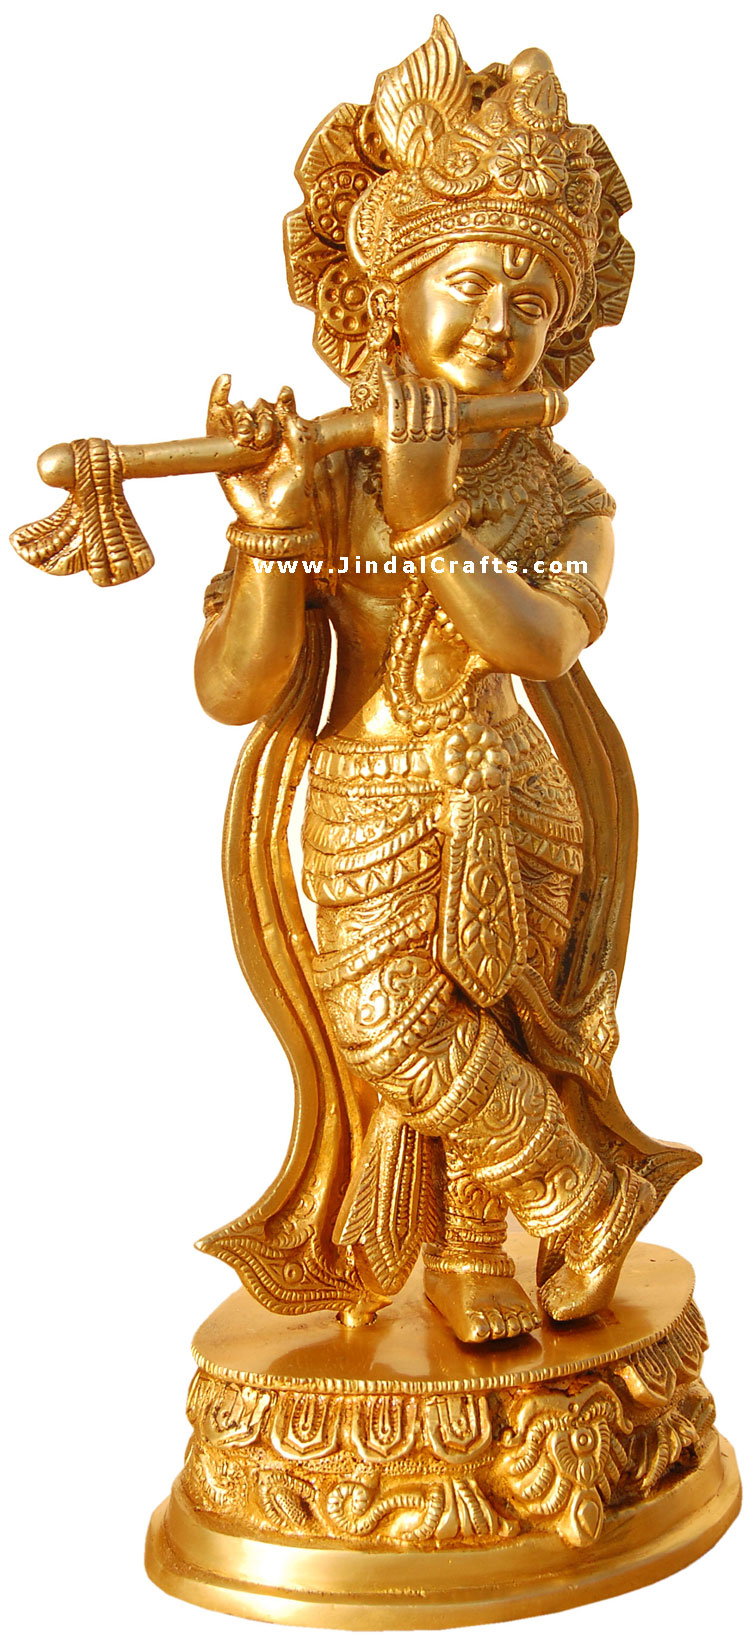 Lord Krishan Hindu Religious Figurine from India